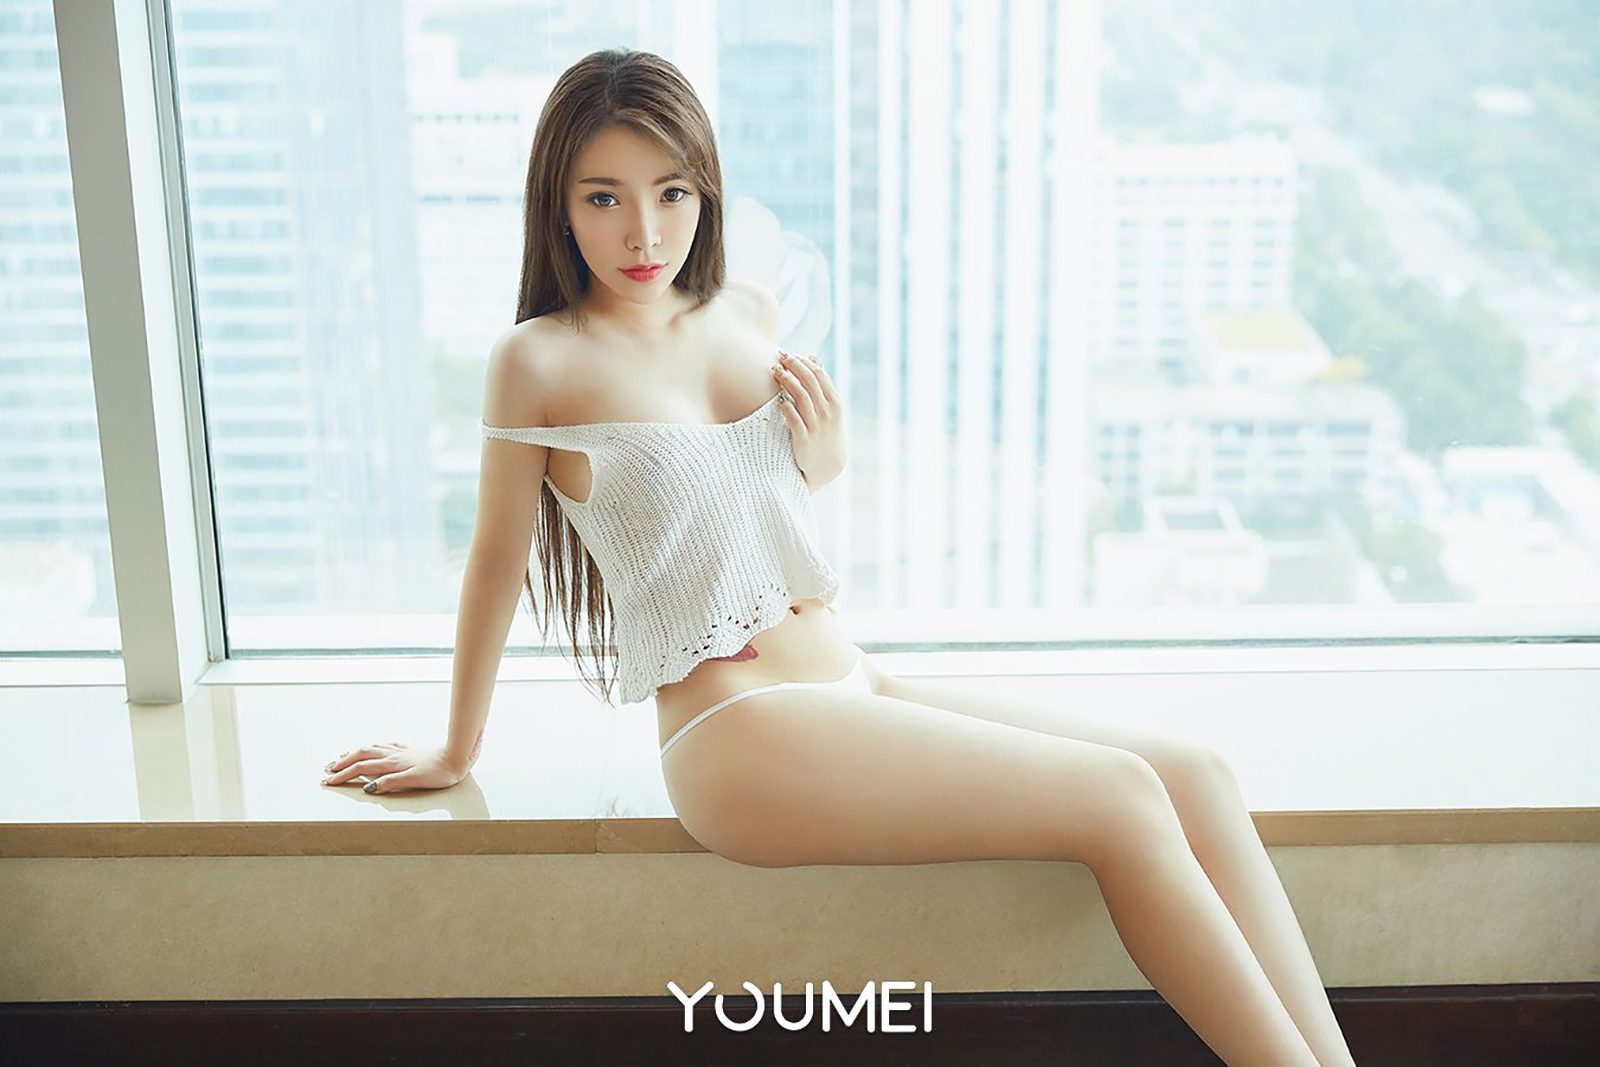 [Youmei Youmei] no.076, November 5, 2018